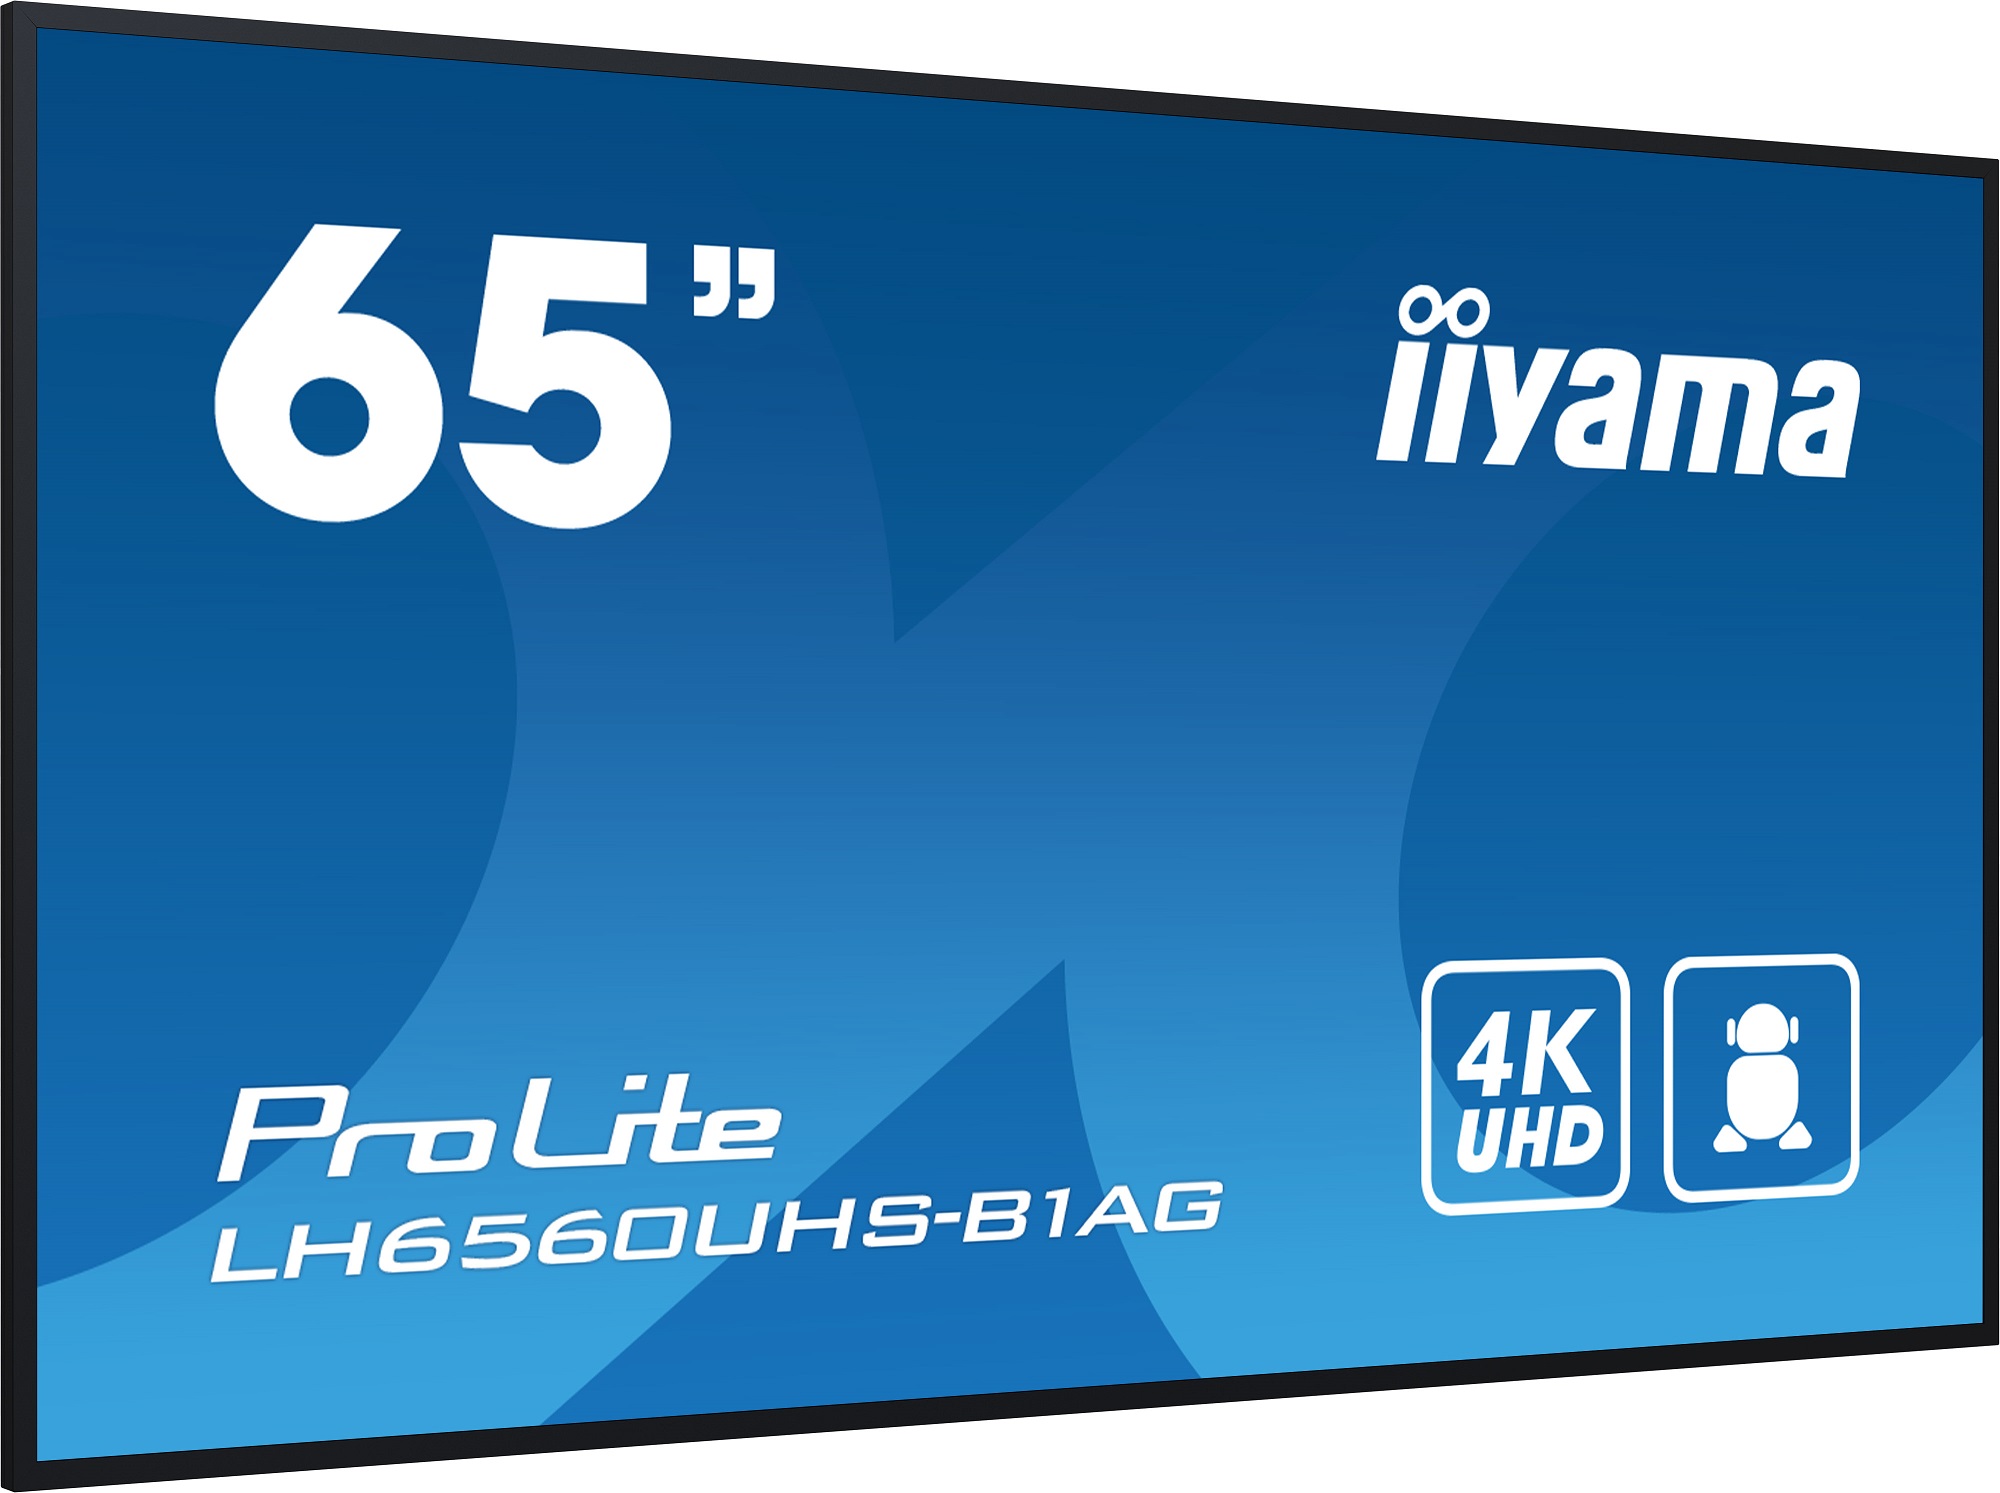 65" iiyama LH6560UHS-B1AG: VA, 4K UHD, Andr.11, 24/ 7 